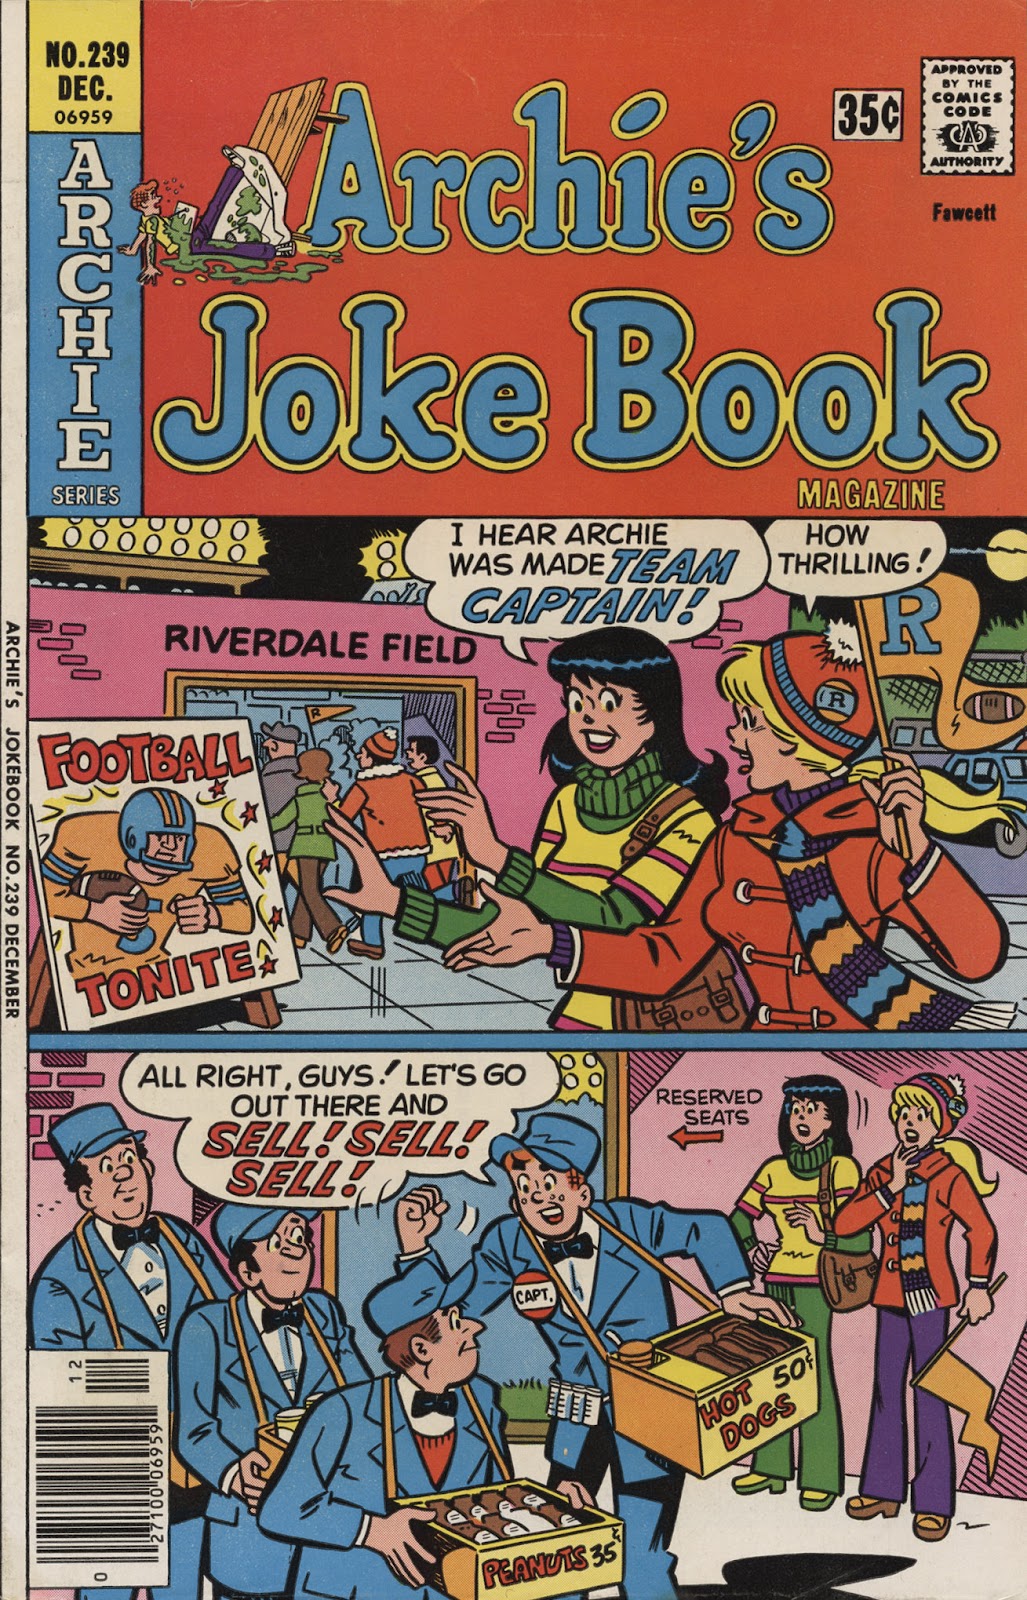 Archie's Joke Book Magazine 239 Page 1